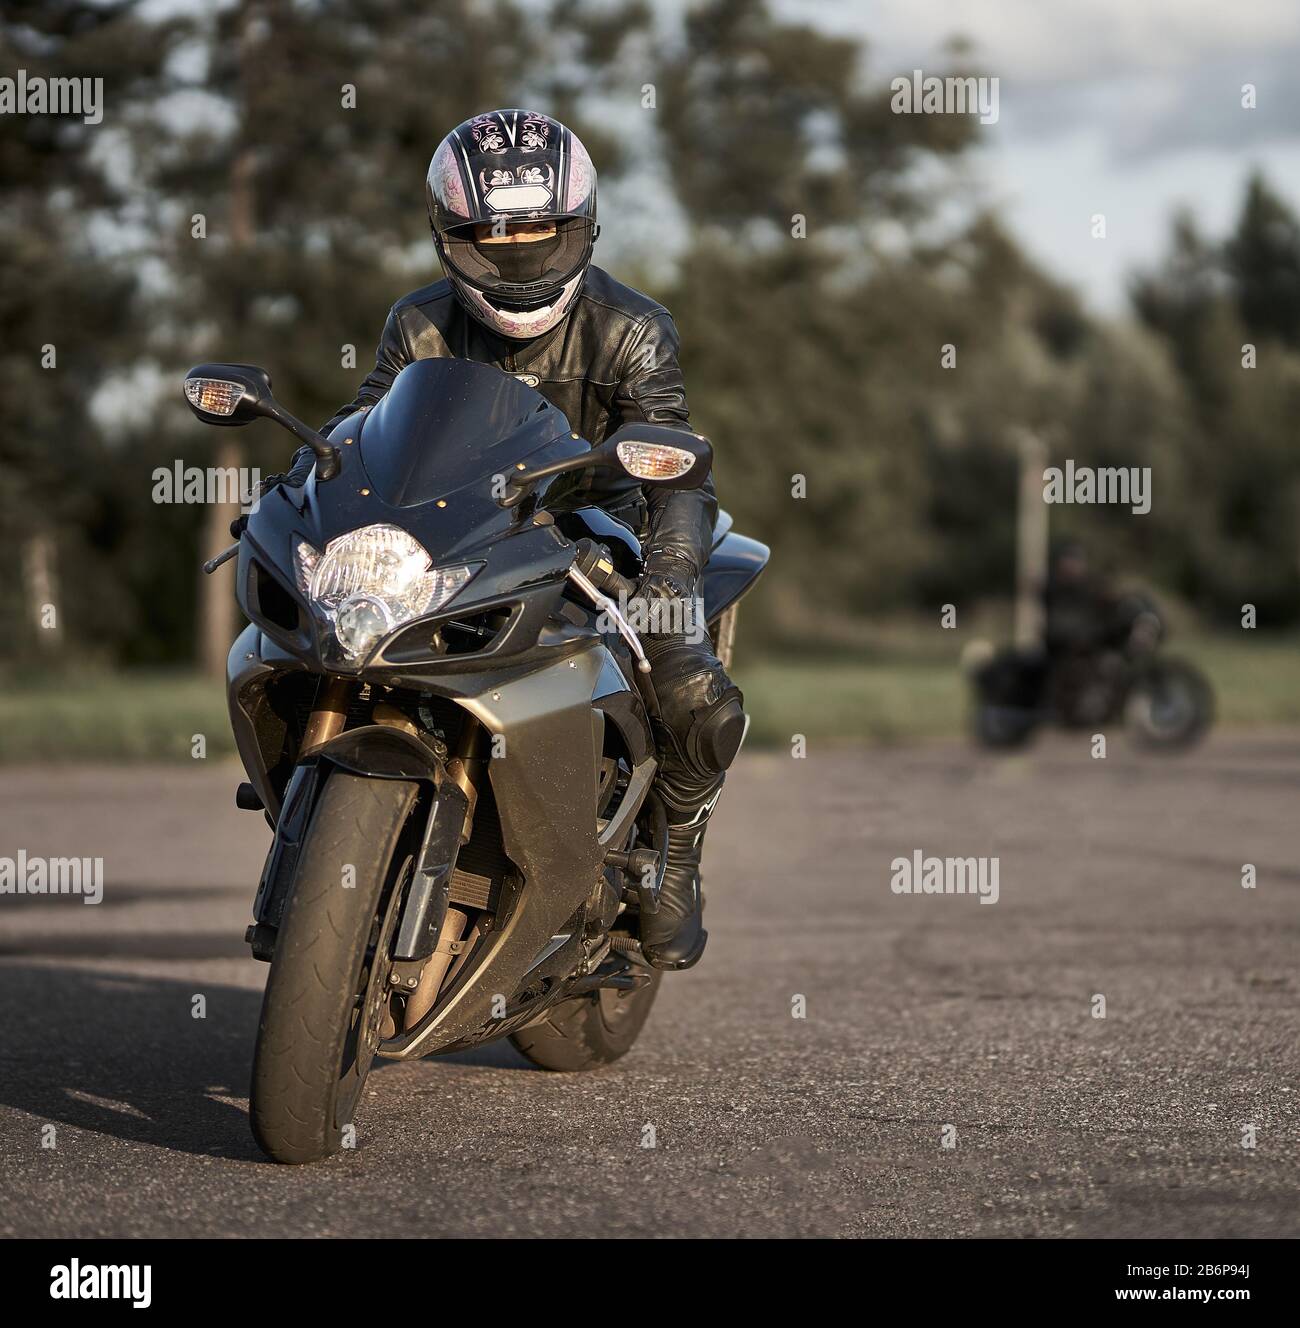 sport motorcycle. black leather jacket. Girl biker. Woman at motorcycle. Black motorcycle. Motorcycle rider Stock Photo